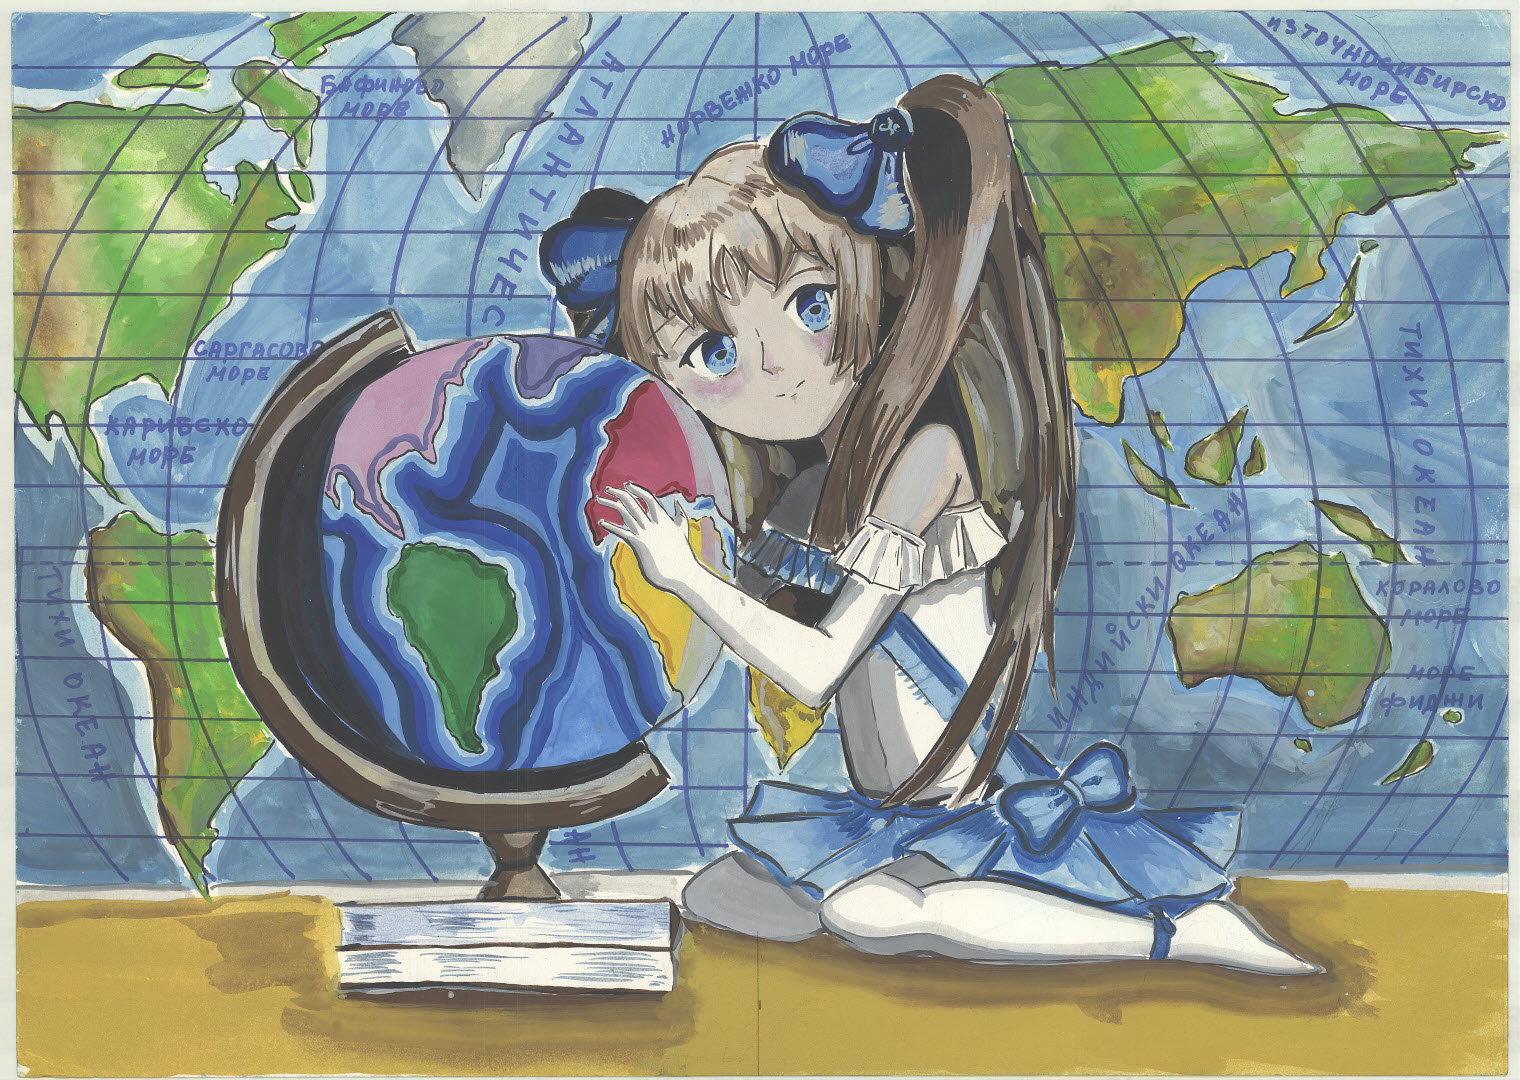 Shows a girl embracing a globe